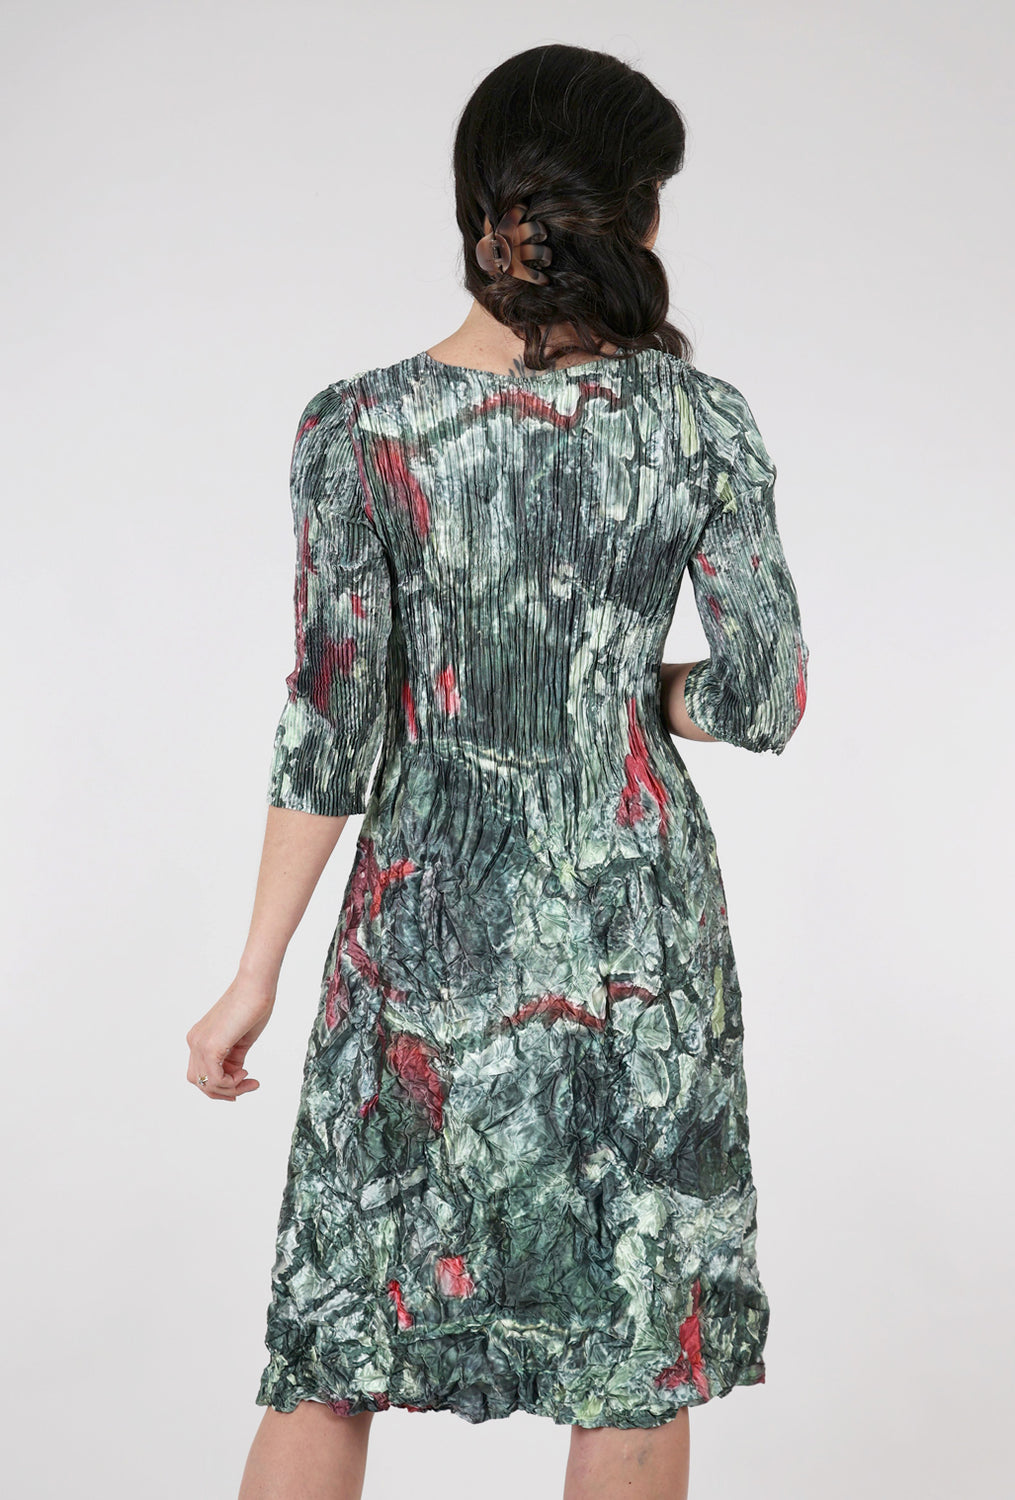 Alquema 3/4-Sleeve Smash Pocket Dress, Forest Delta 